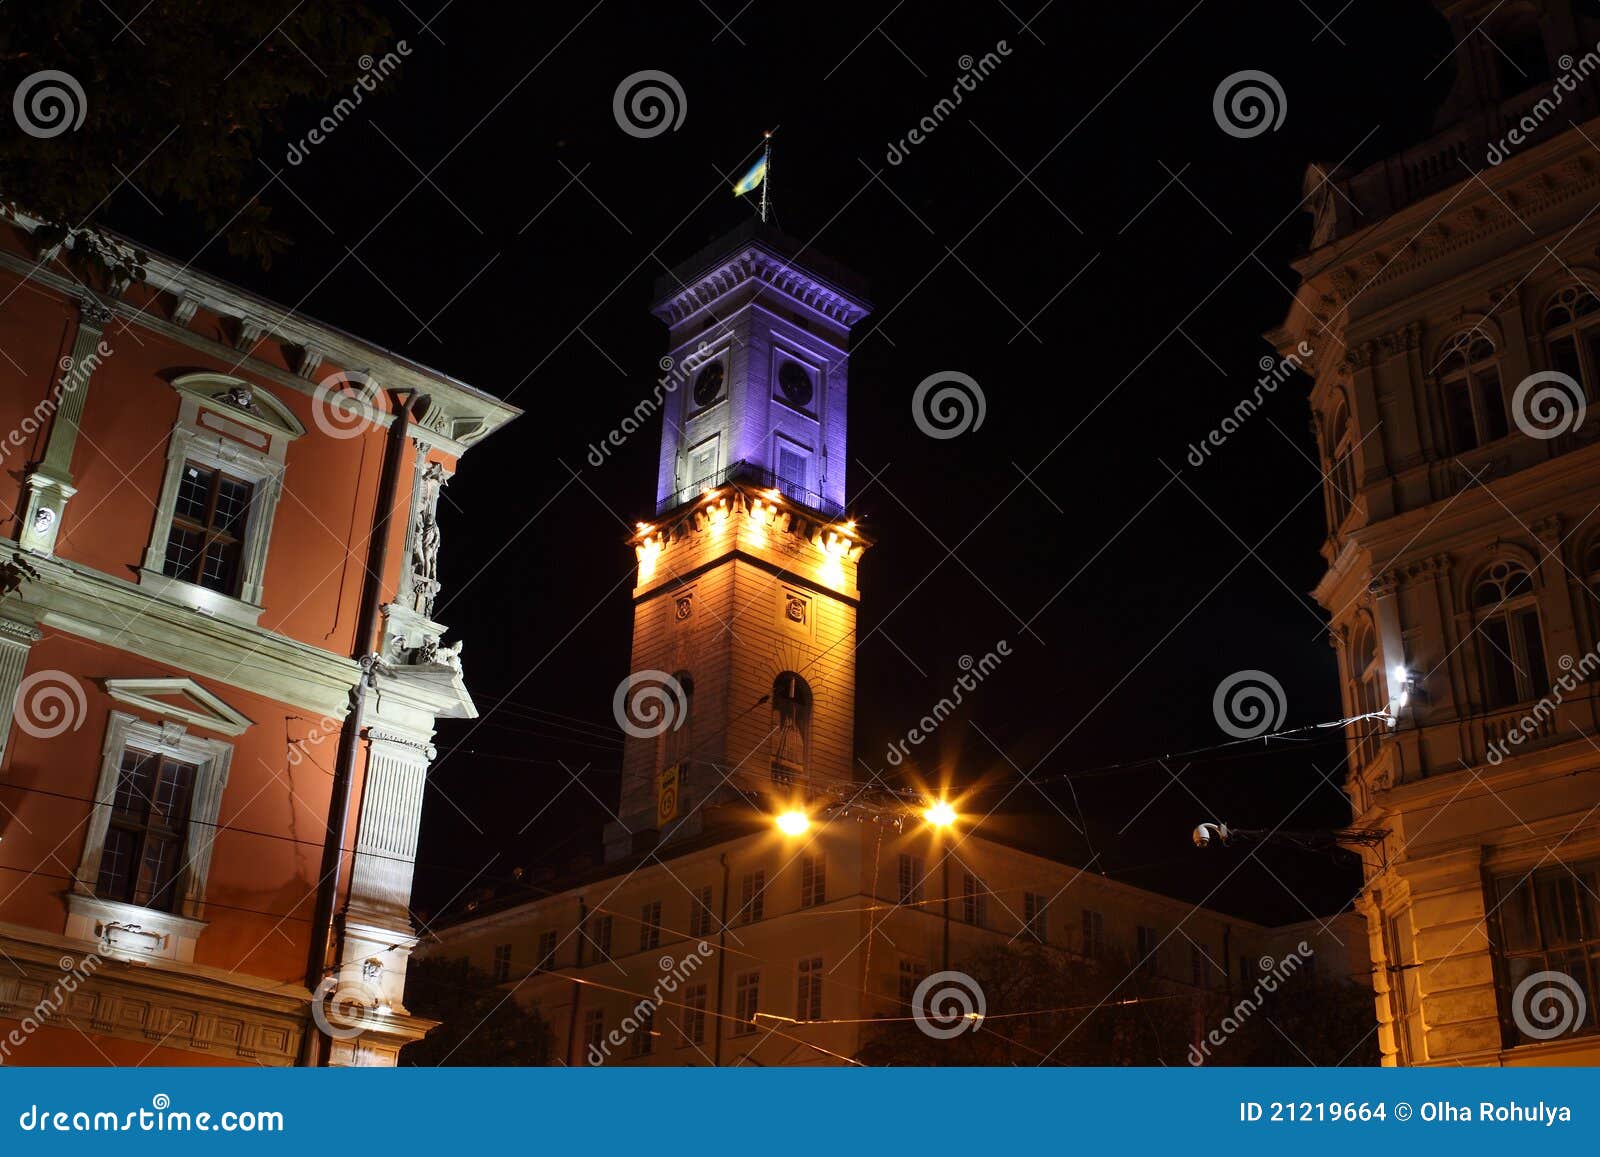 lviv city hall by night